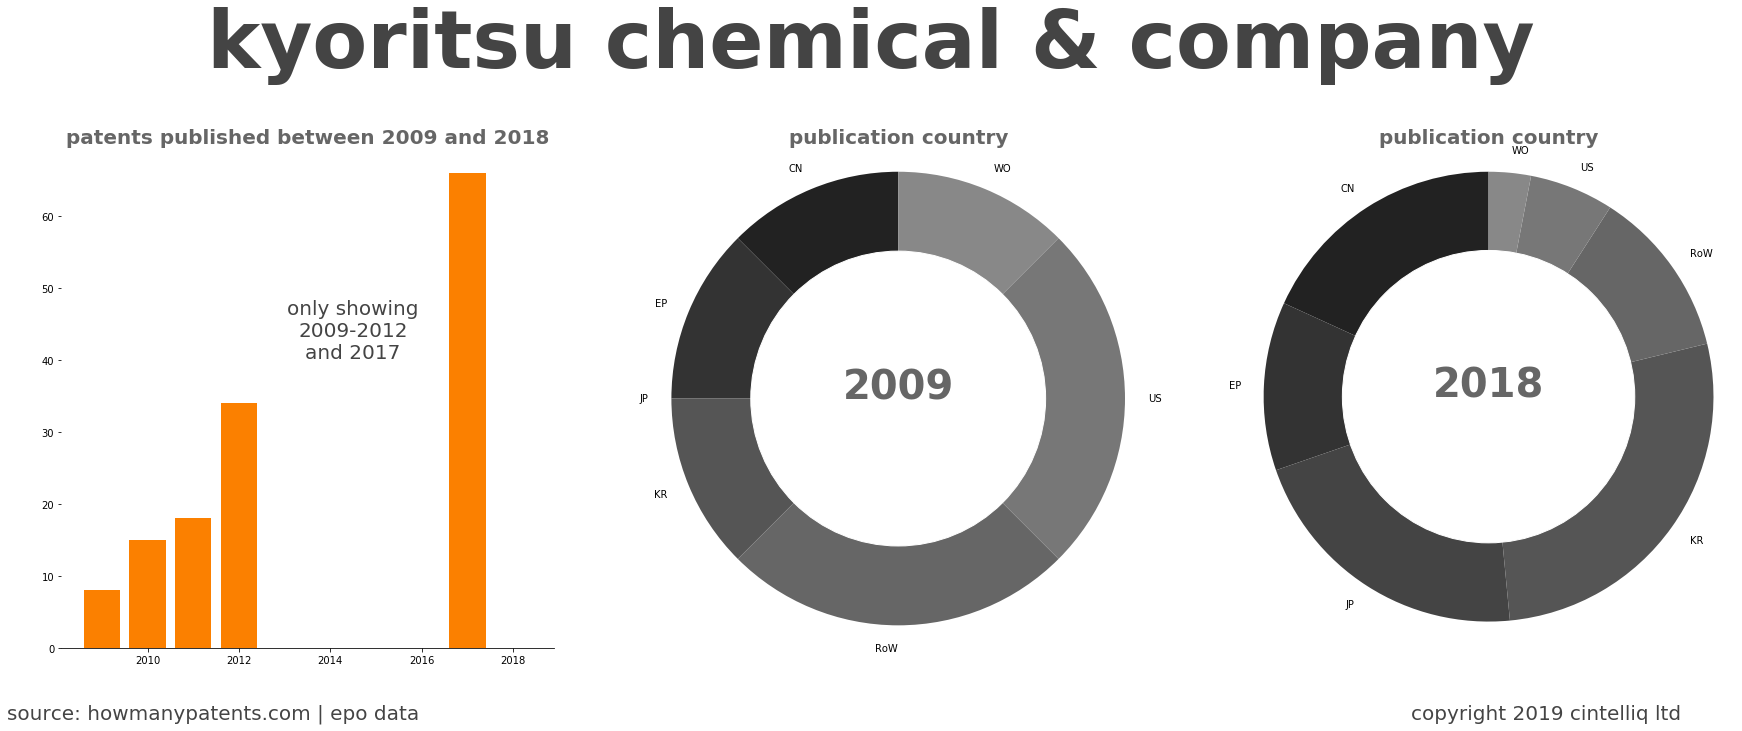 summary of patents for Kyoritsu Chemical & Company